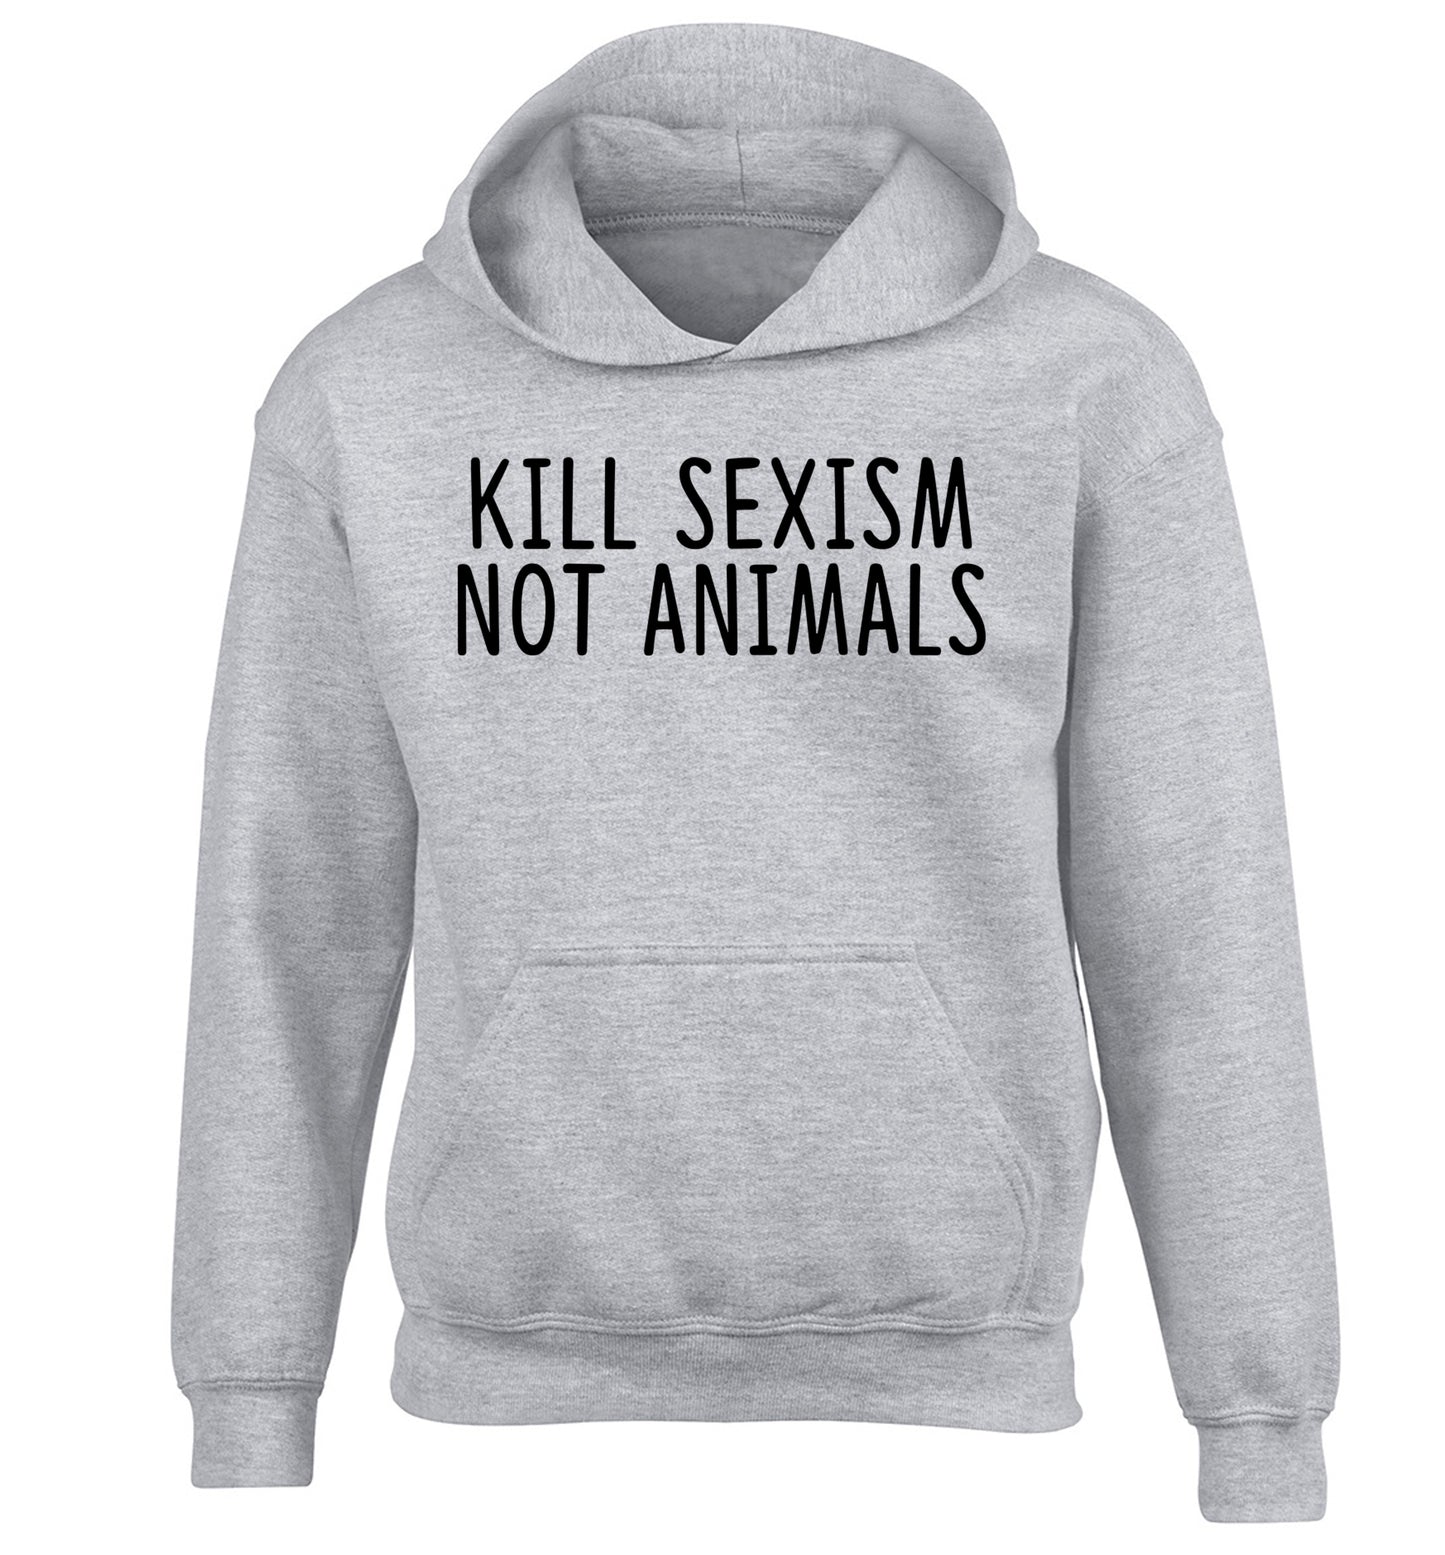 Kill Sexism Not Animals children's grey hoodie 12-13 Years